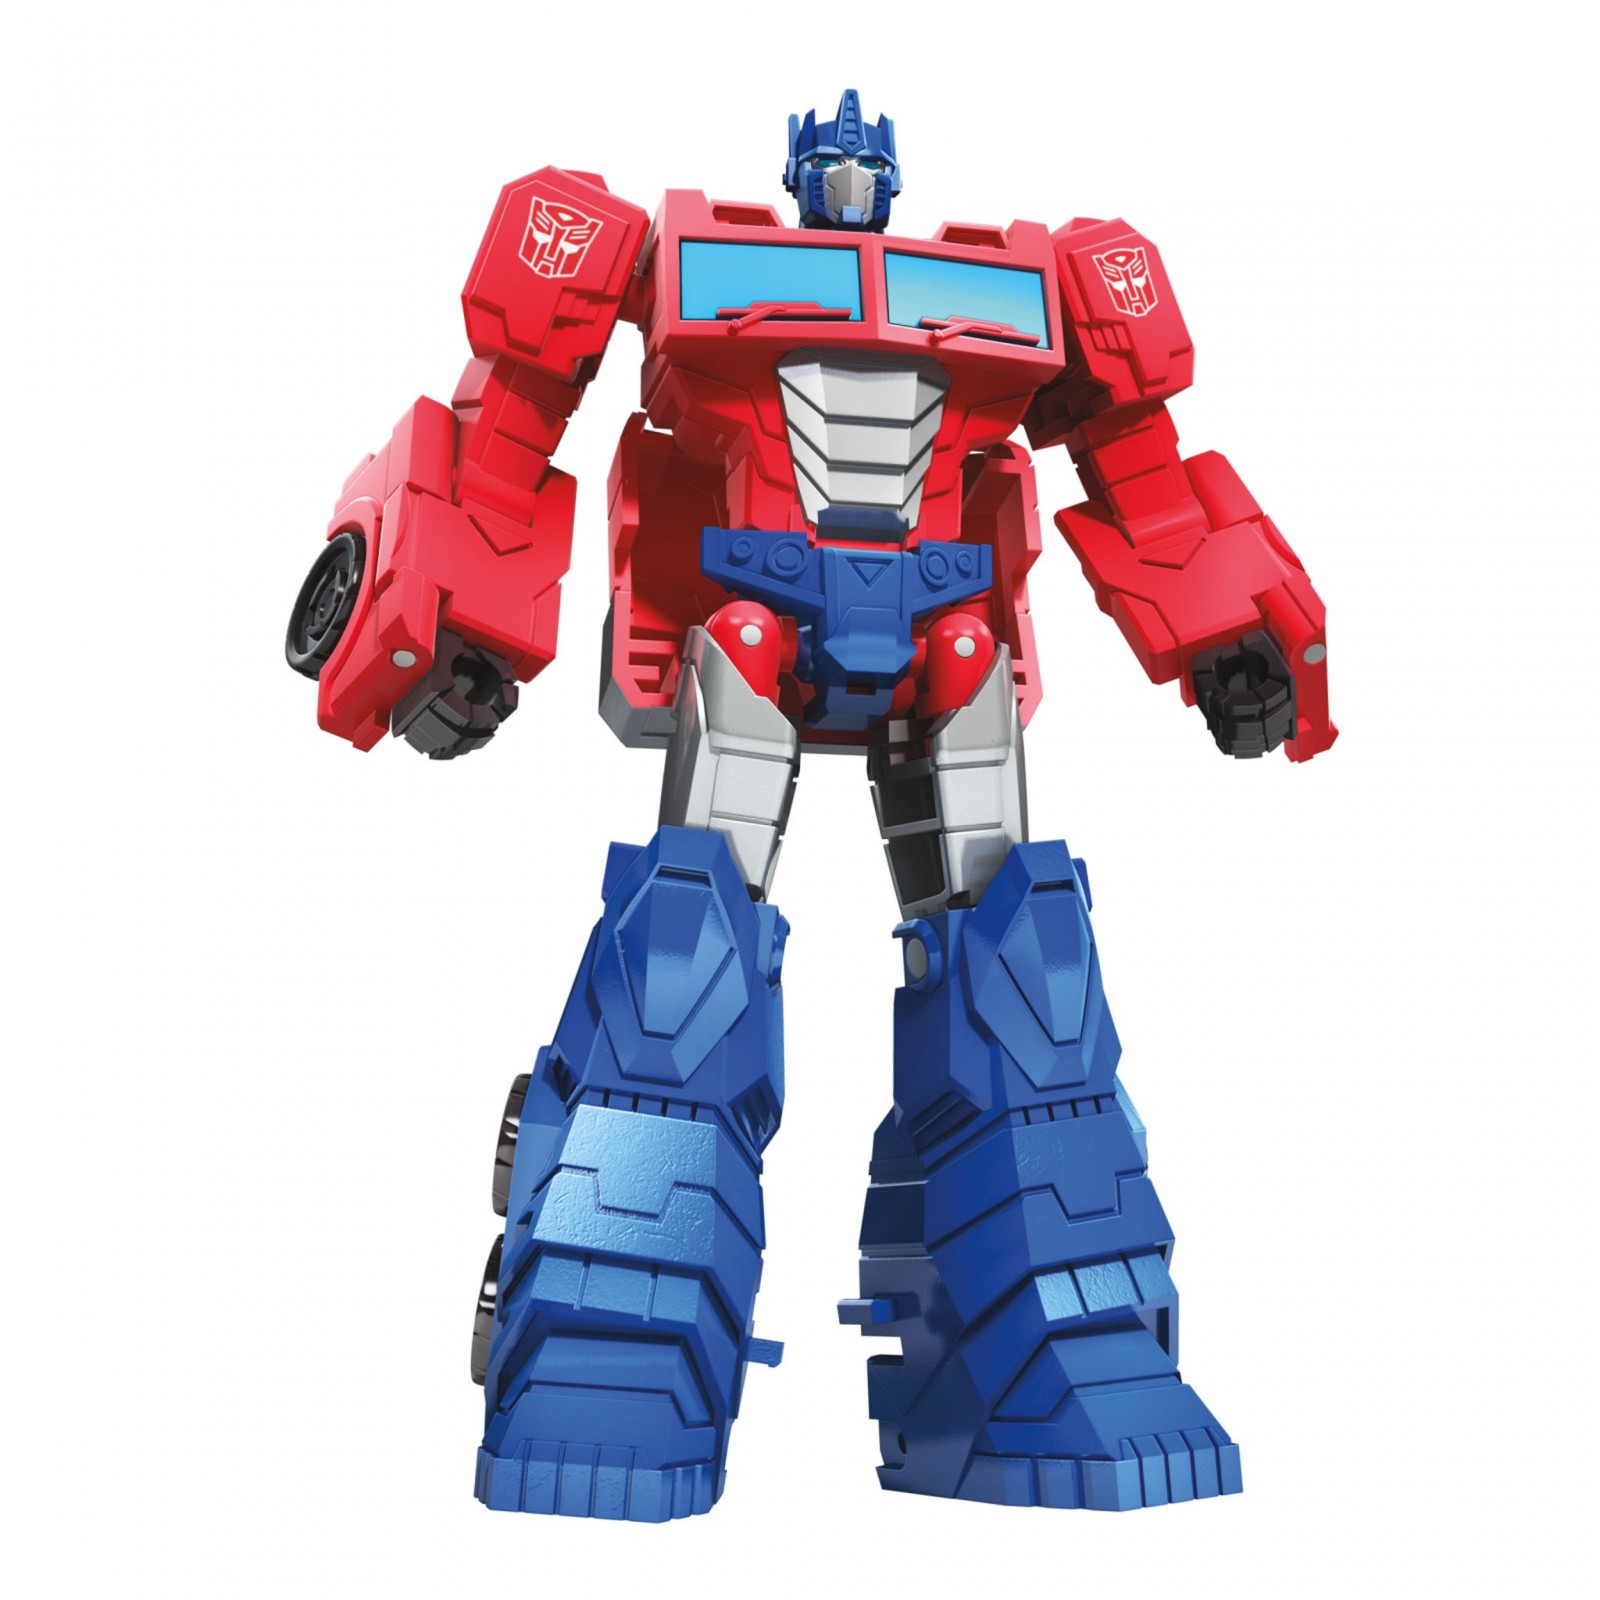 Transformers News: Transformers Cyberverse Spark Armor Toys Revealed